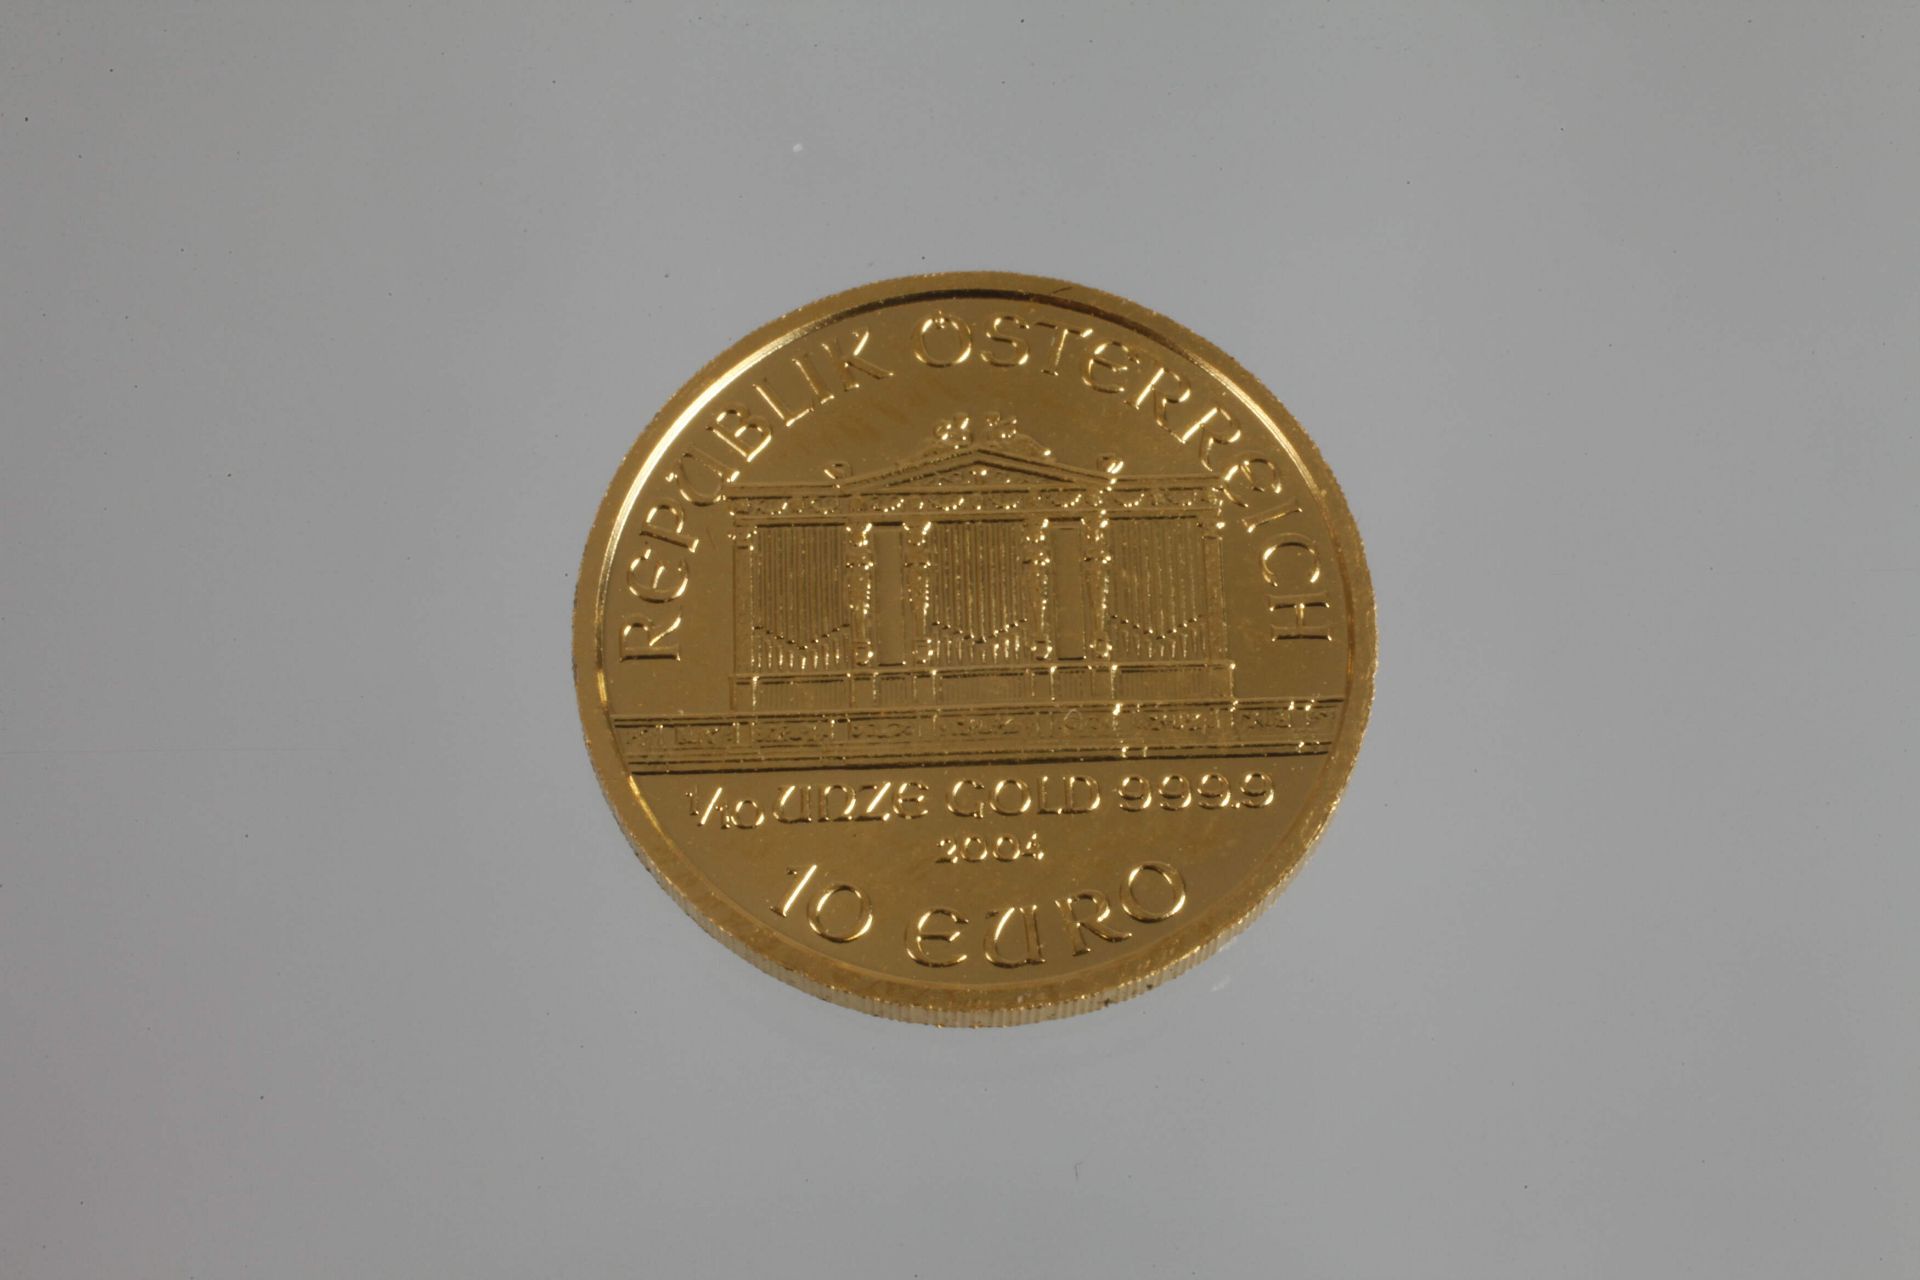 10 Euro Gold Vienna Philharmonic 2004 - Image 2 of 3